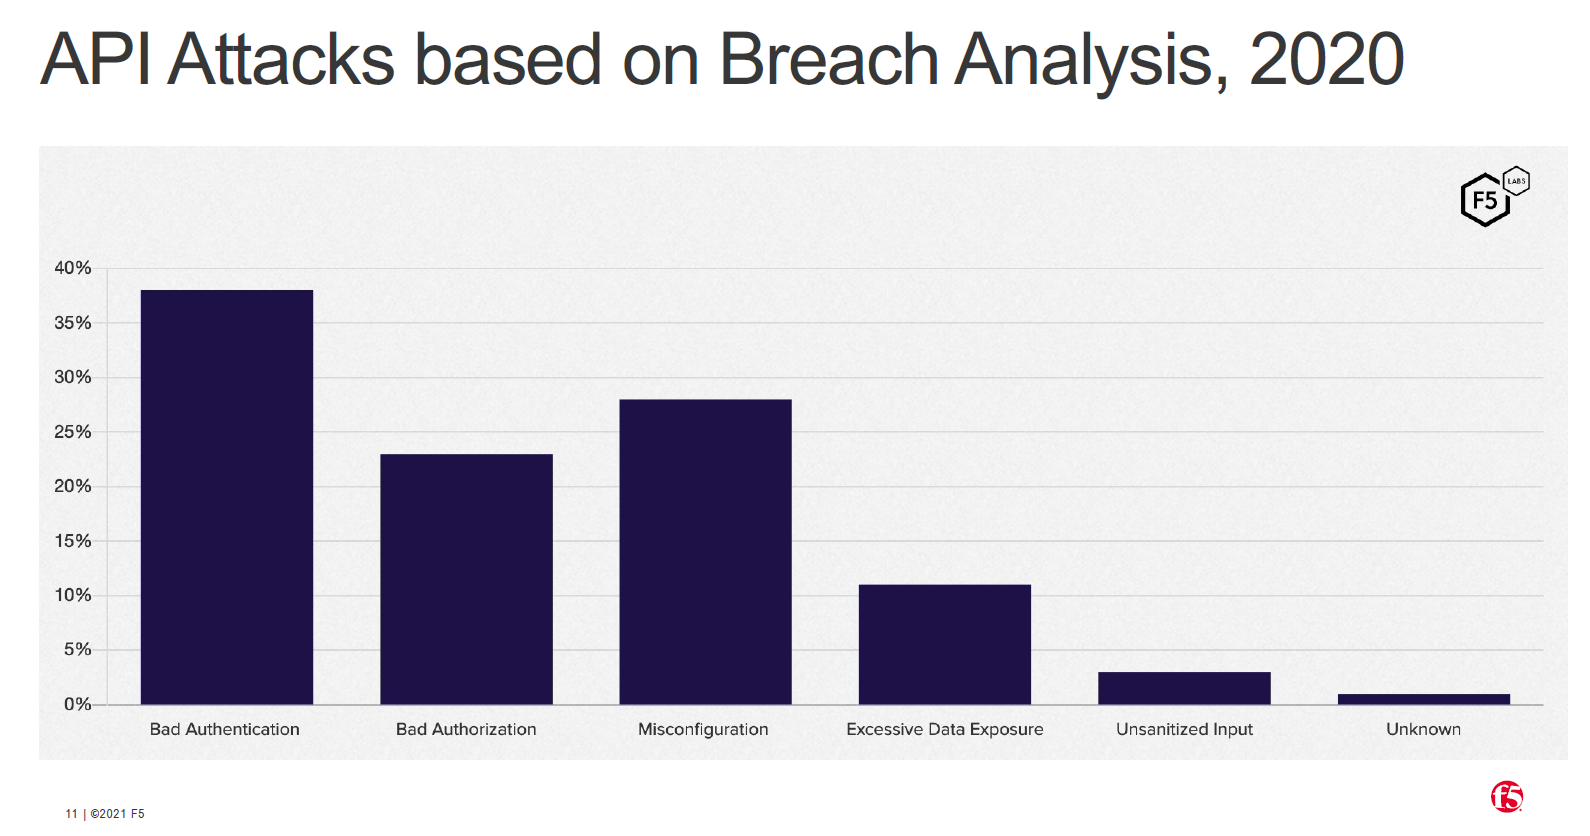 API attacks based on breach analysis